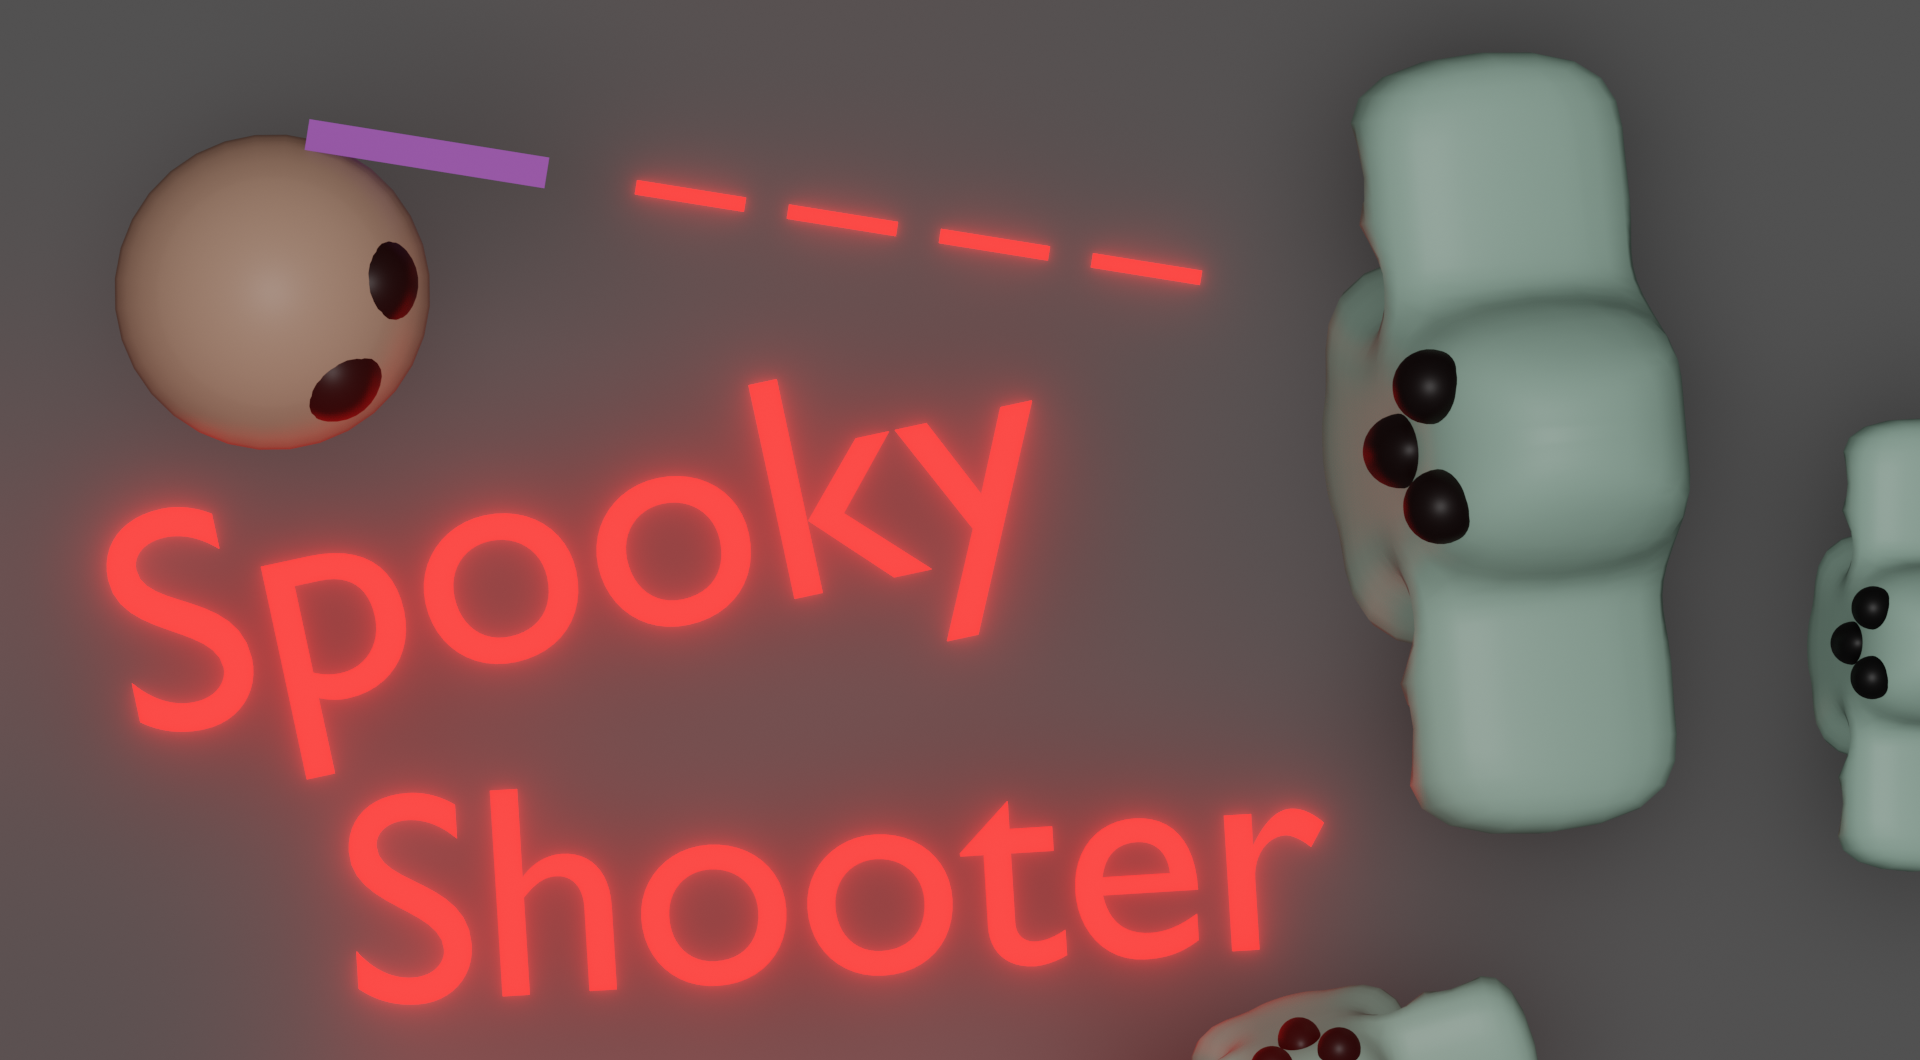 Spooky Shooter - WWGJ